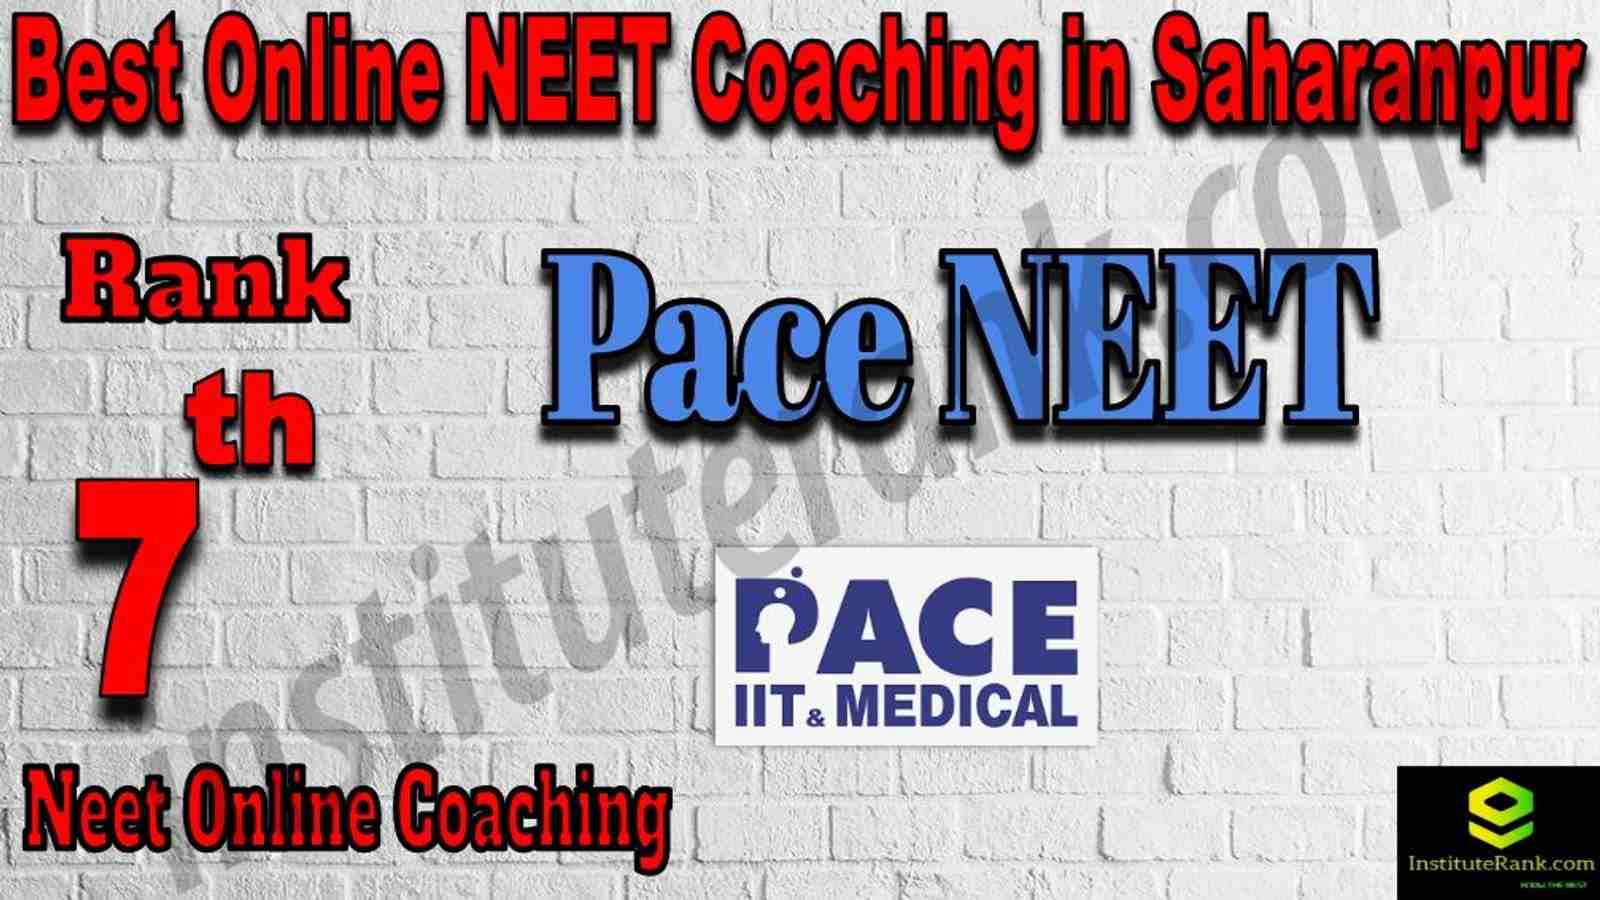 7th Best Online Neet Coaching in Saharanpur